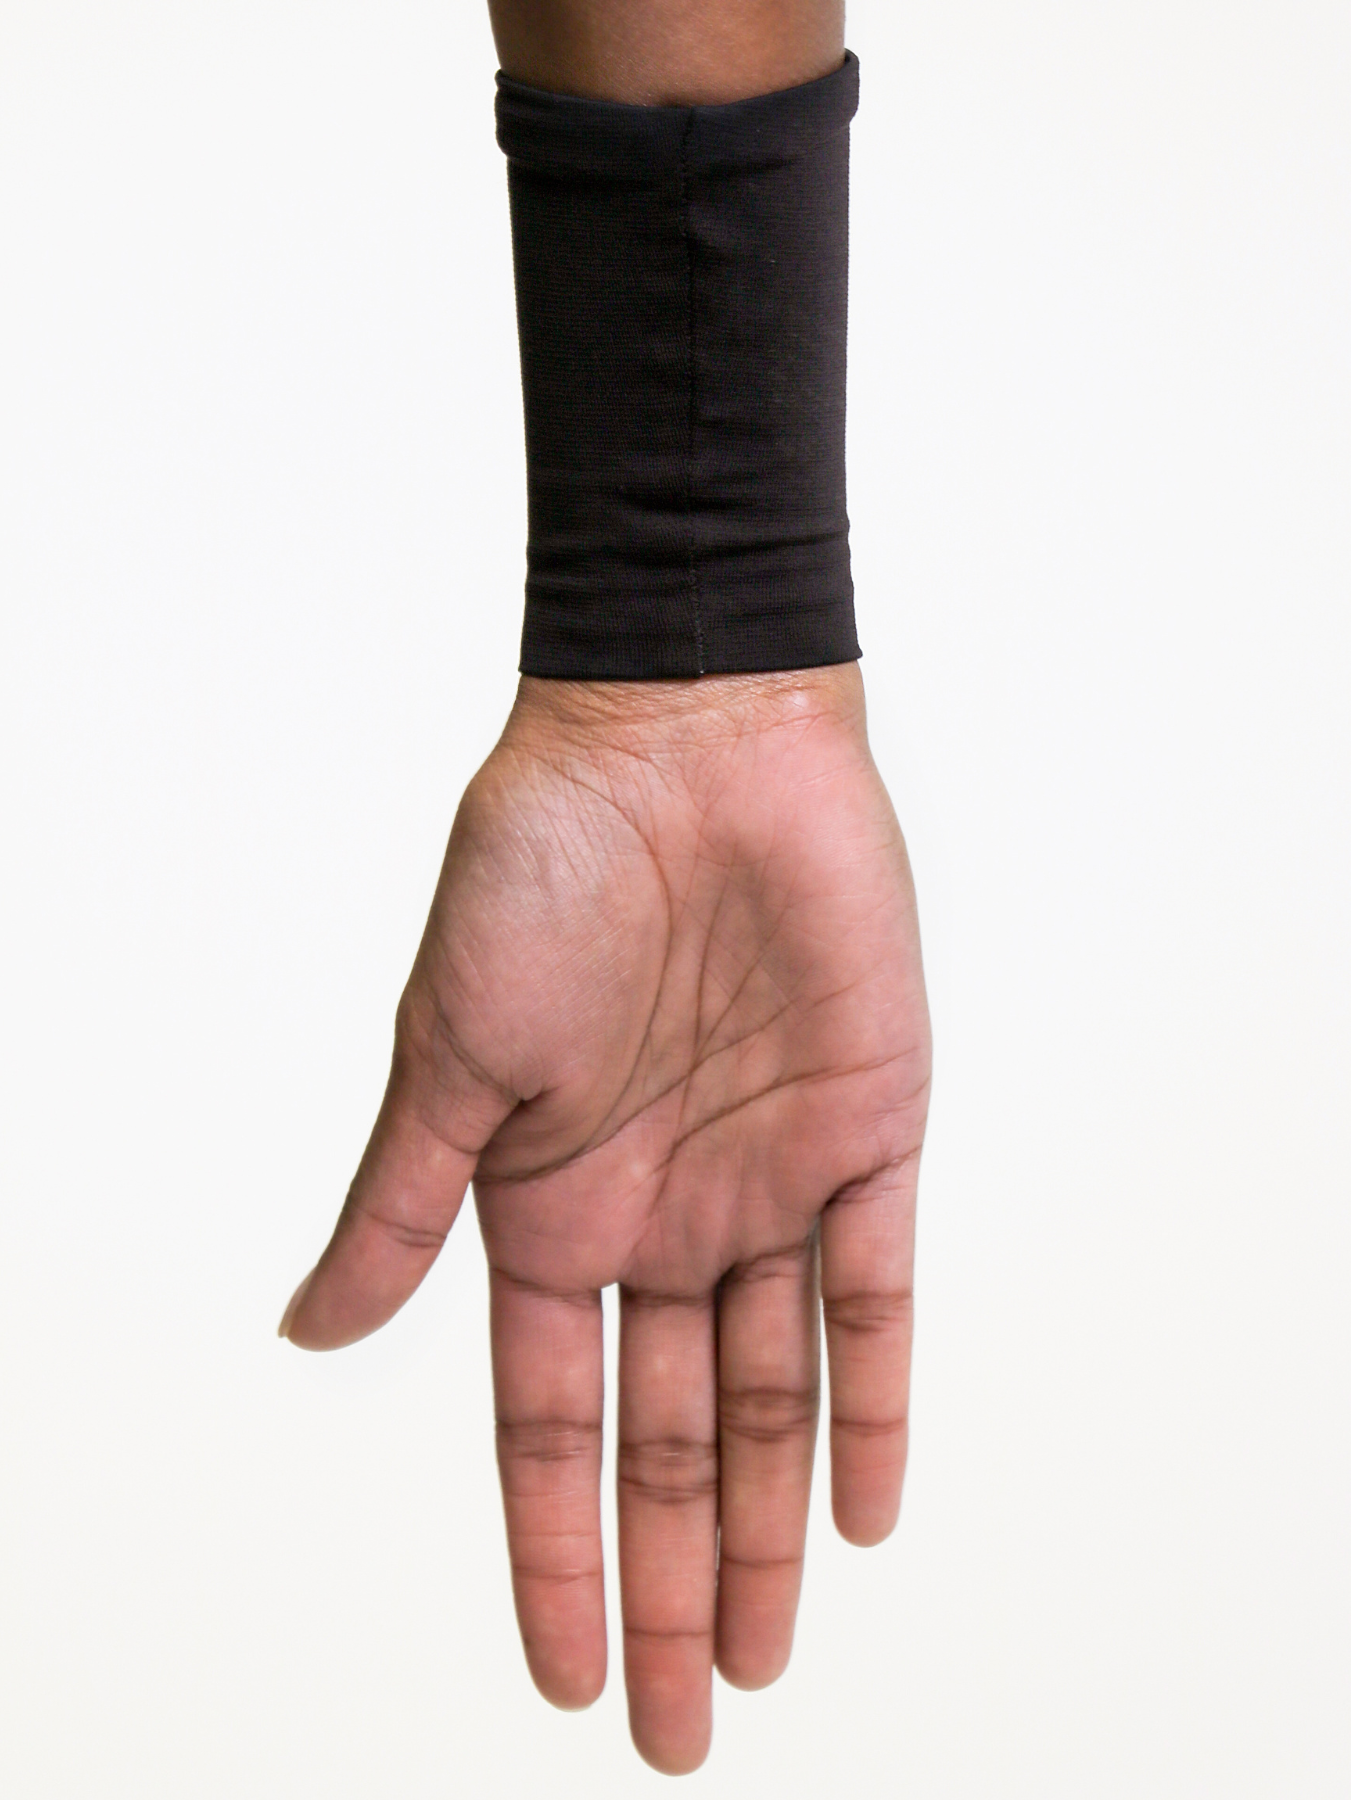 Copper Compression Wrist / Hand Sleeve